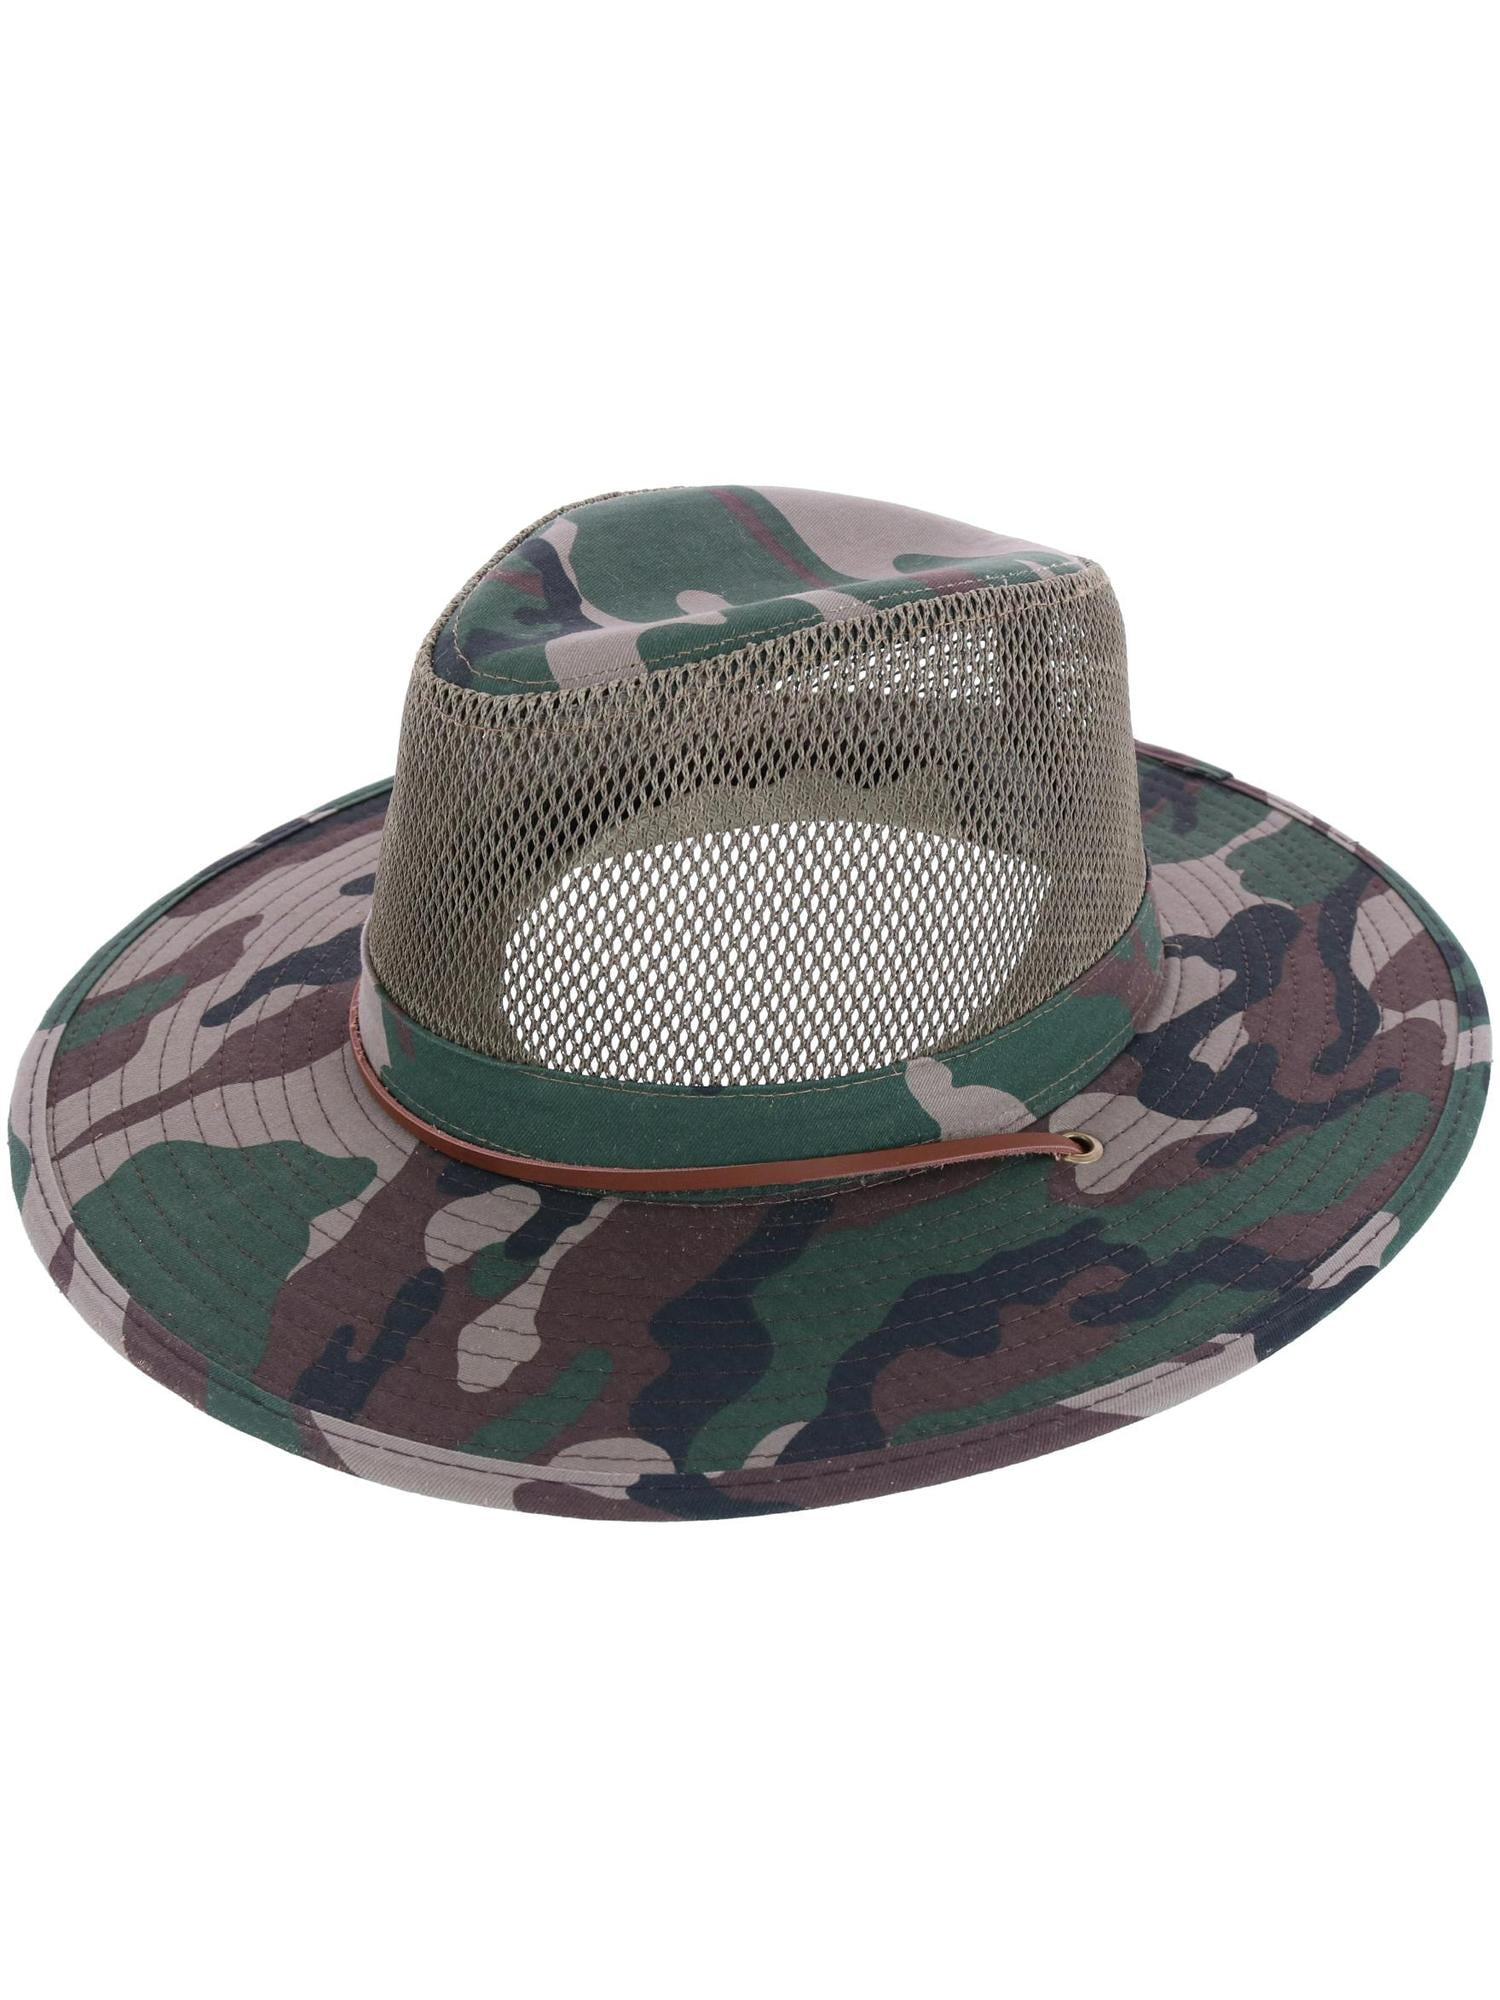 Elysiumland Camo Outdoor Safari Hat with Mesh Crown (Men) - Walmart.com